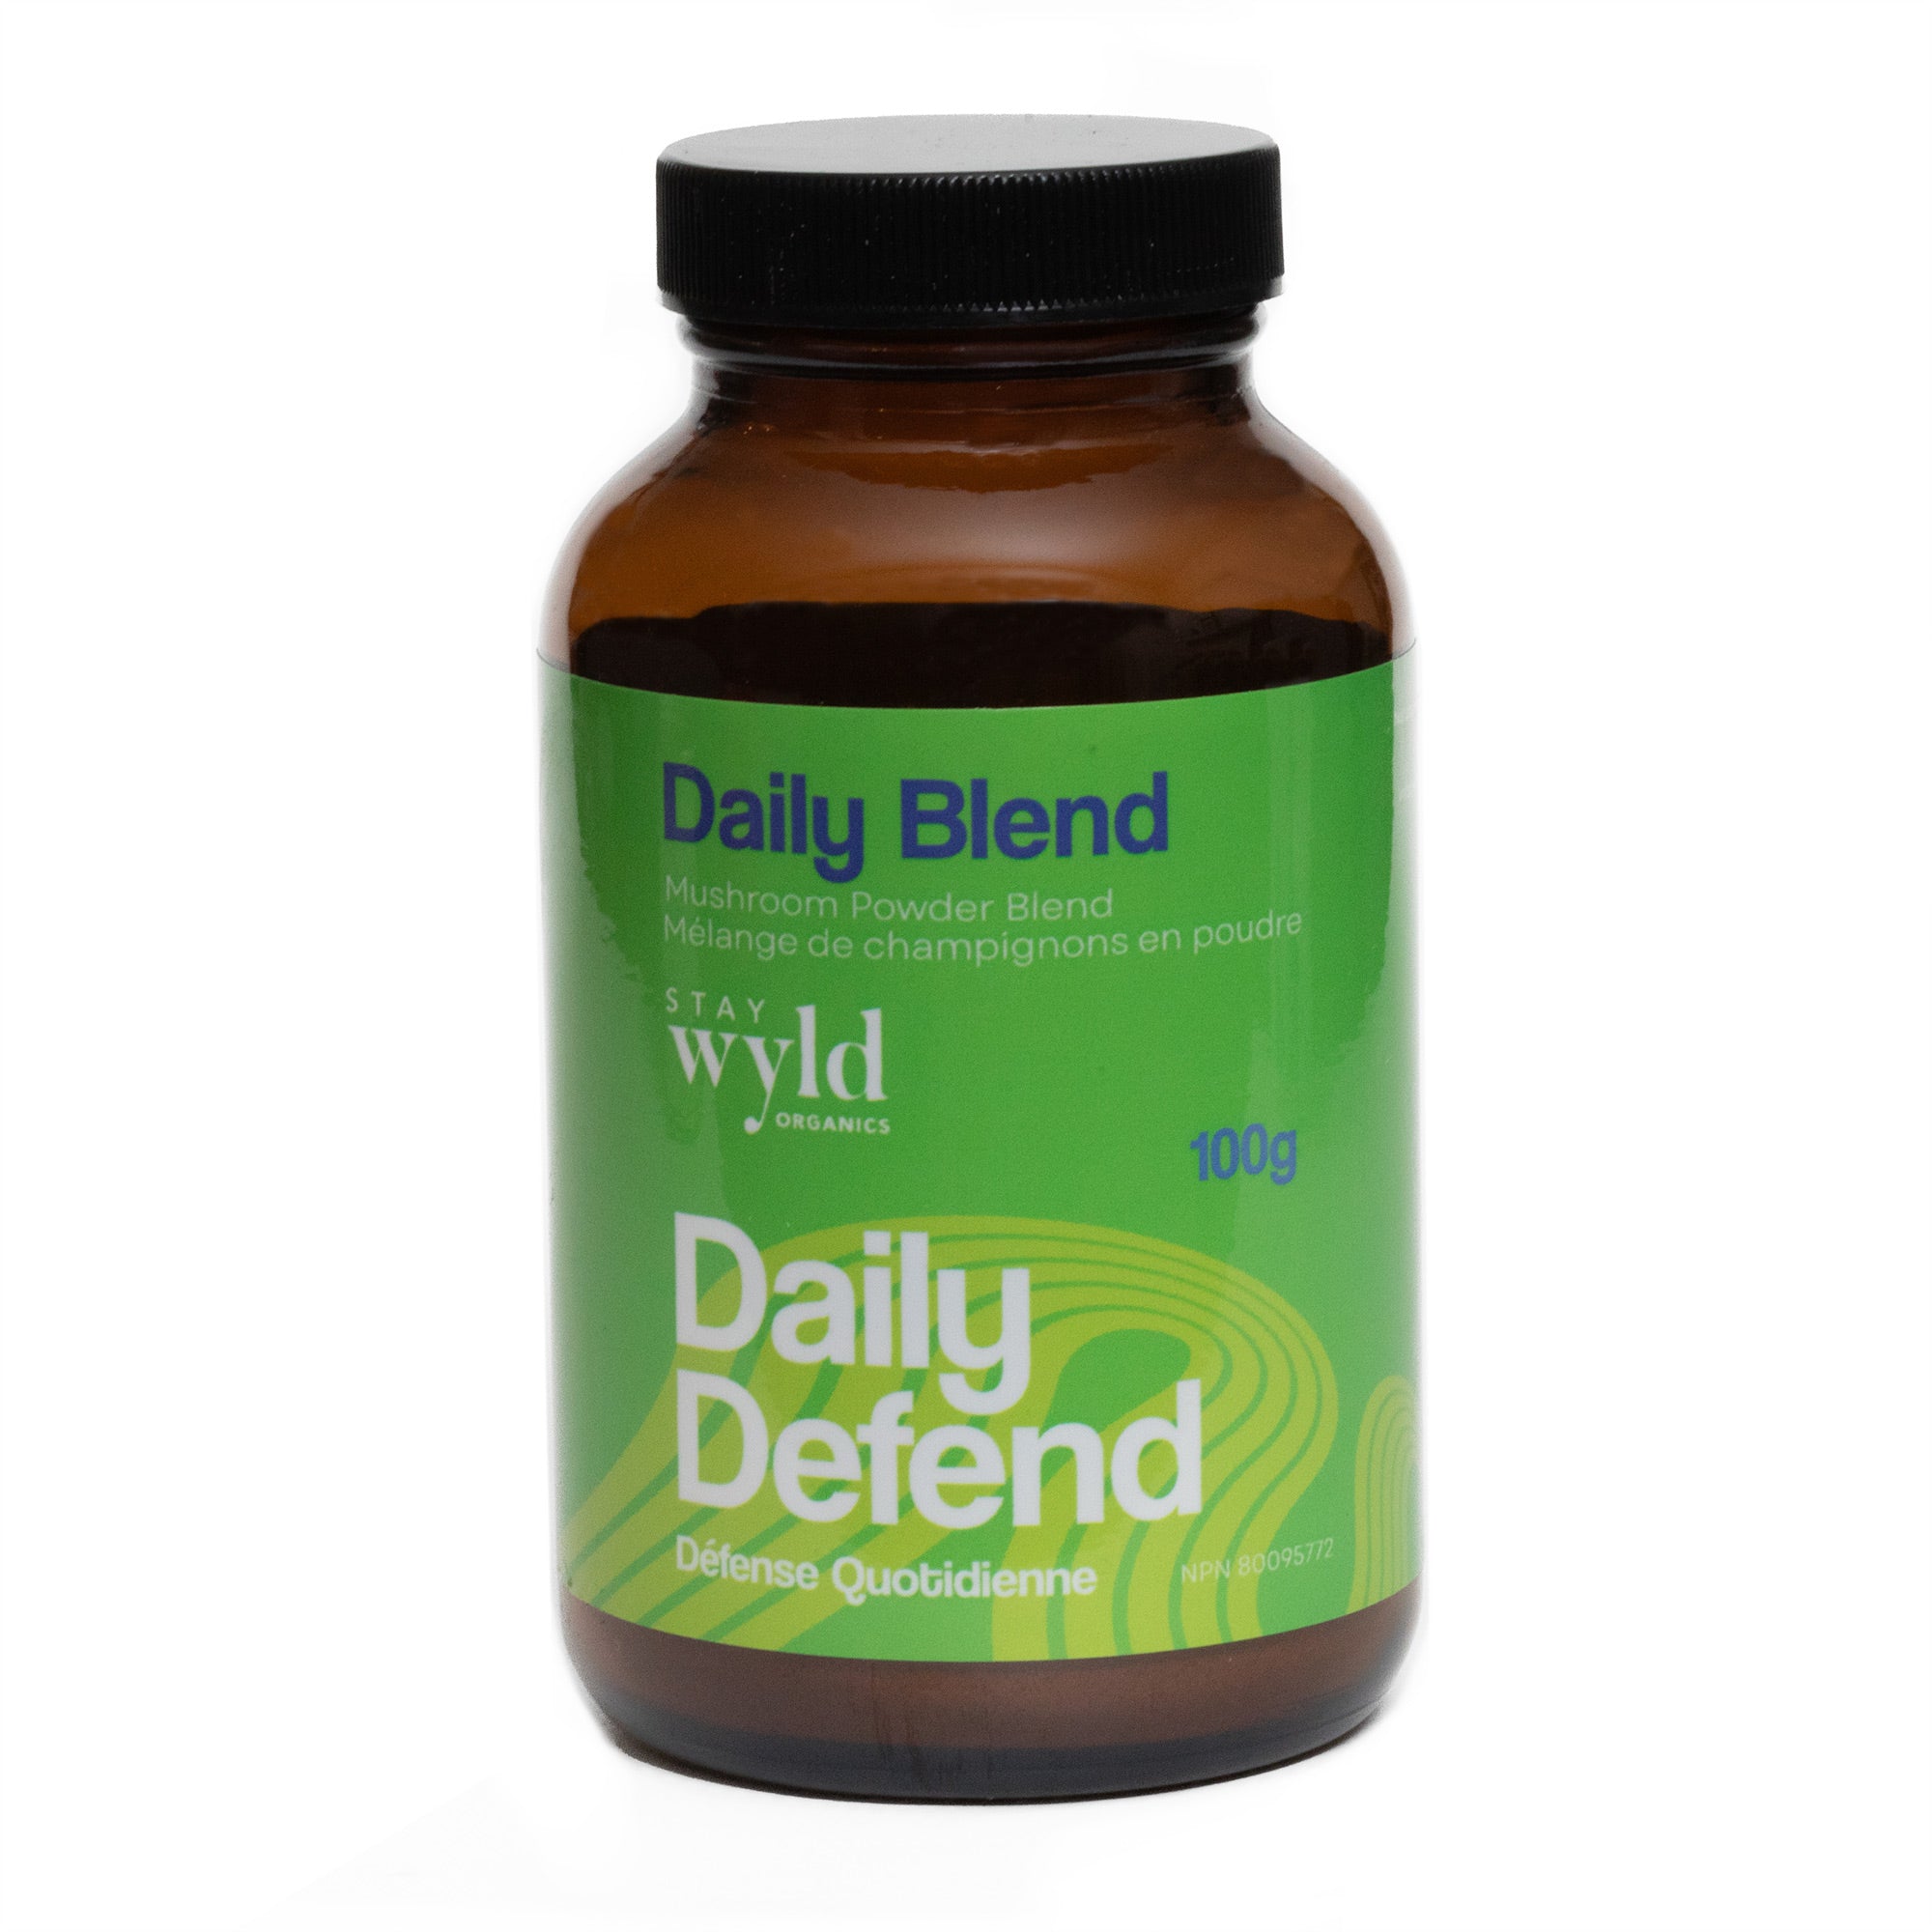 Daily Immunity 5-Blend Powder